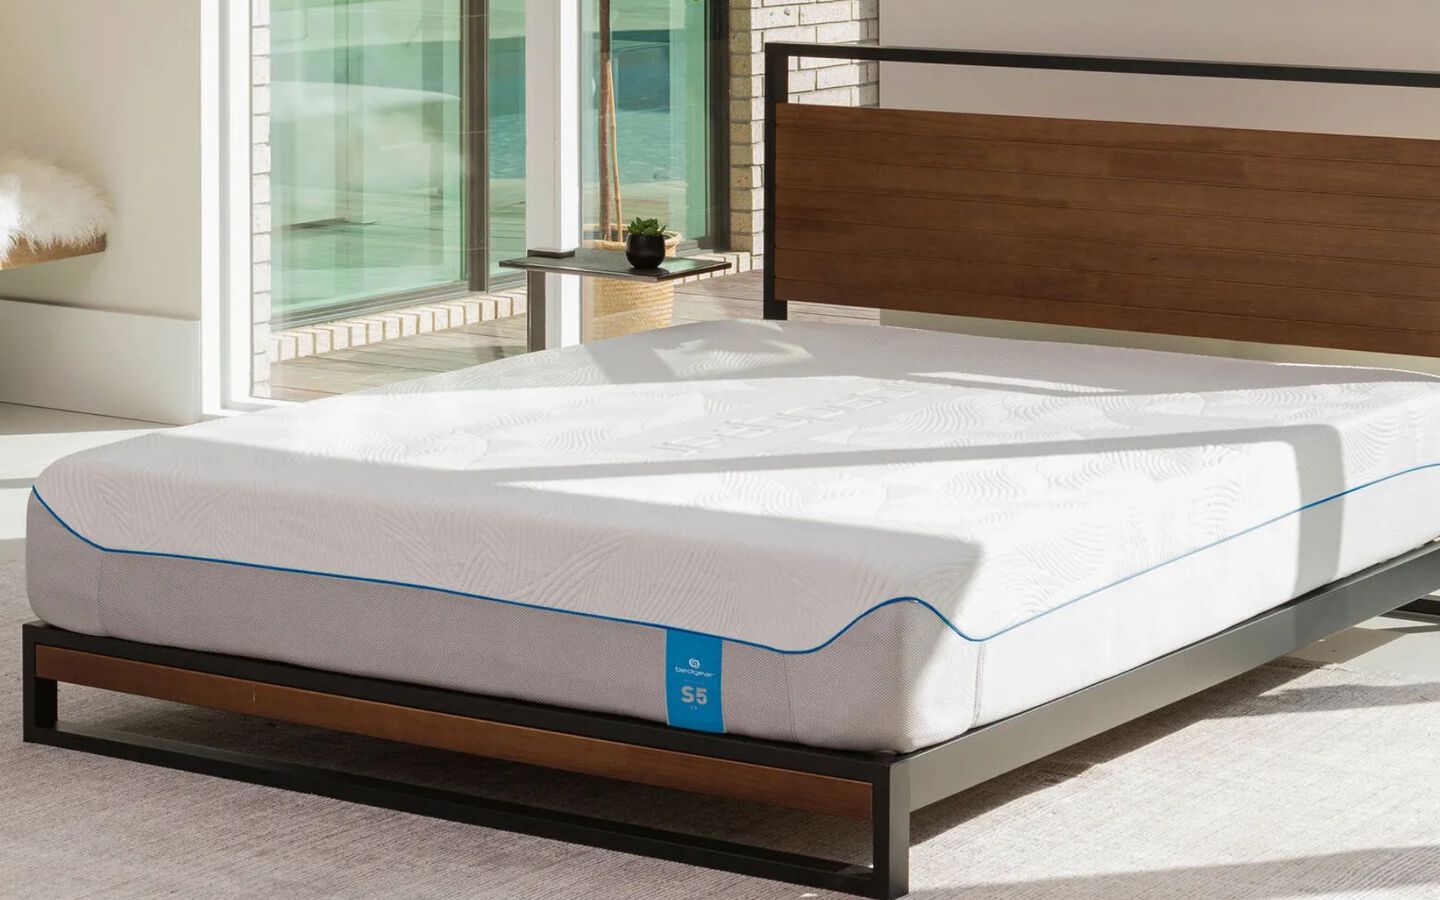 Plain mattress on a black and wood bedframe